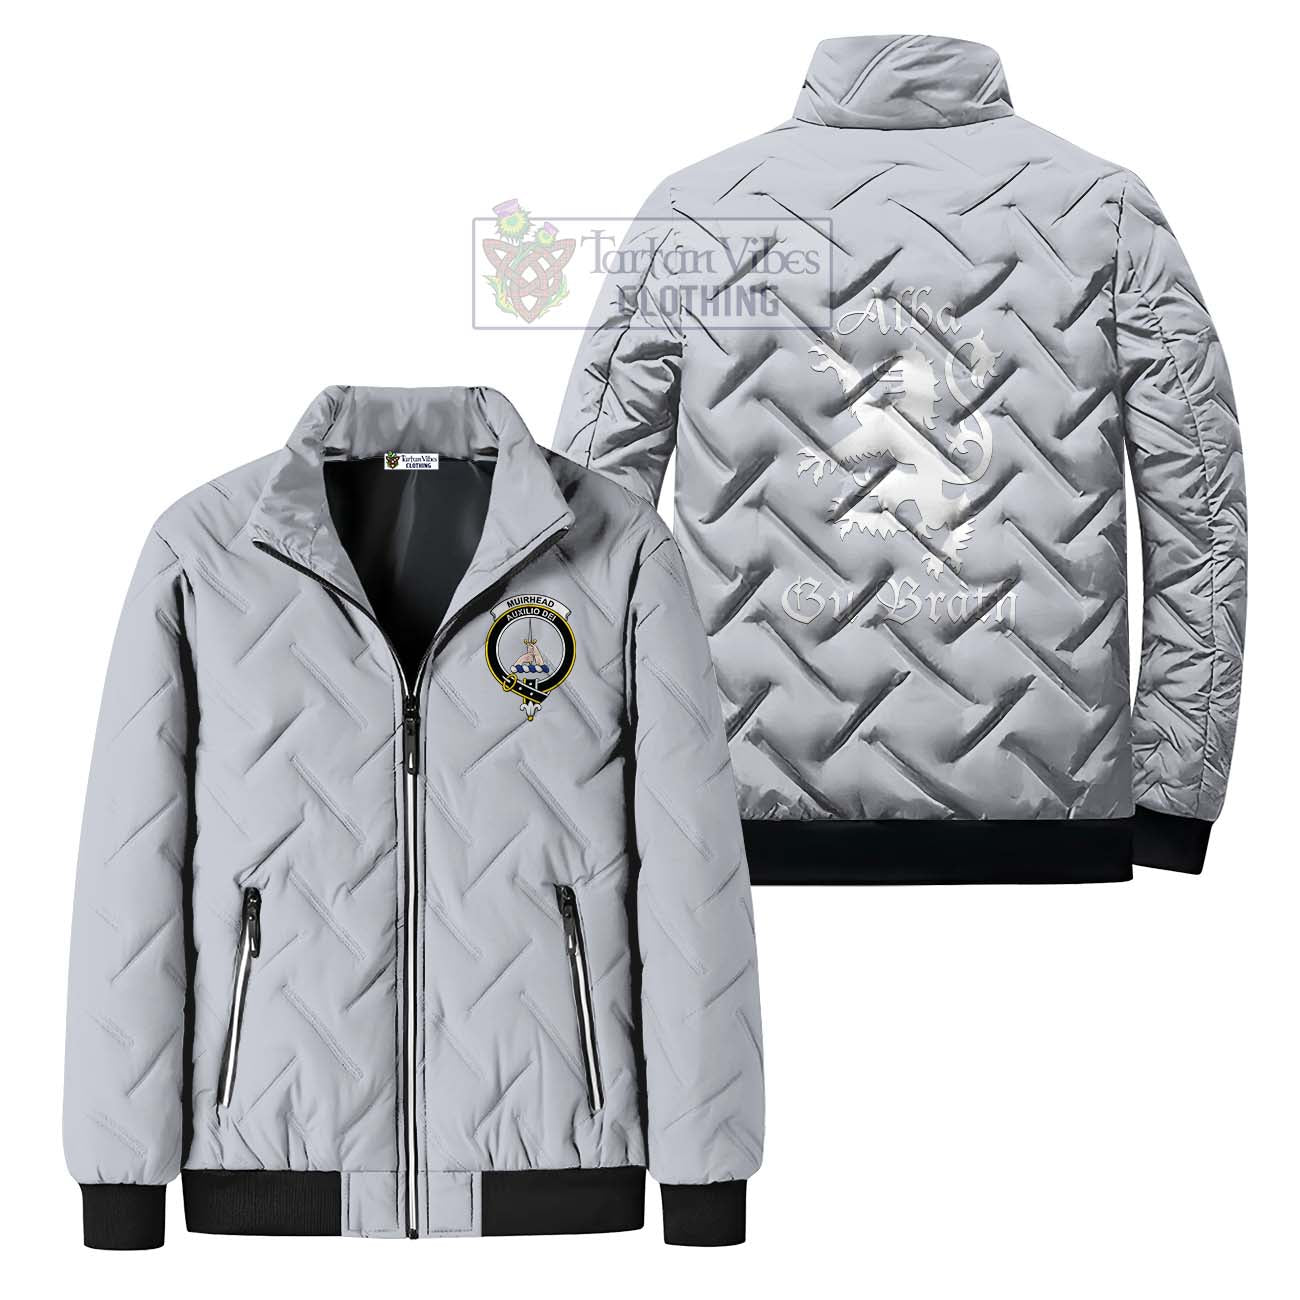 Tartan Vibes Clothing Muirhead Family Crest Padded Cotton Jacket Lion Rampant Alba Gu Brath Style